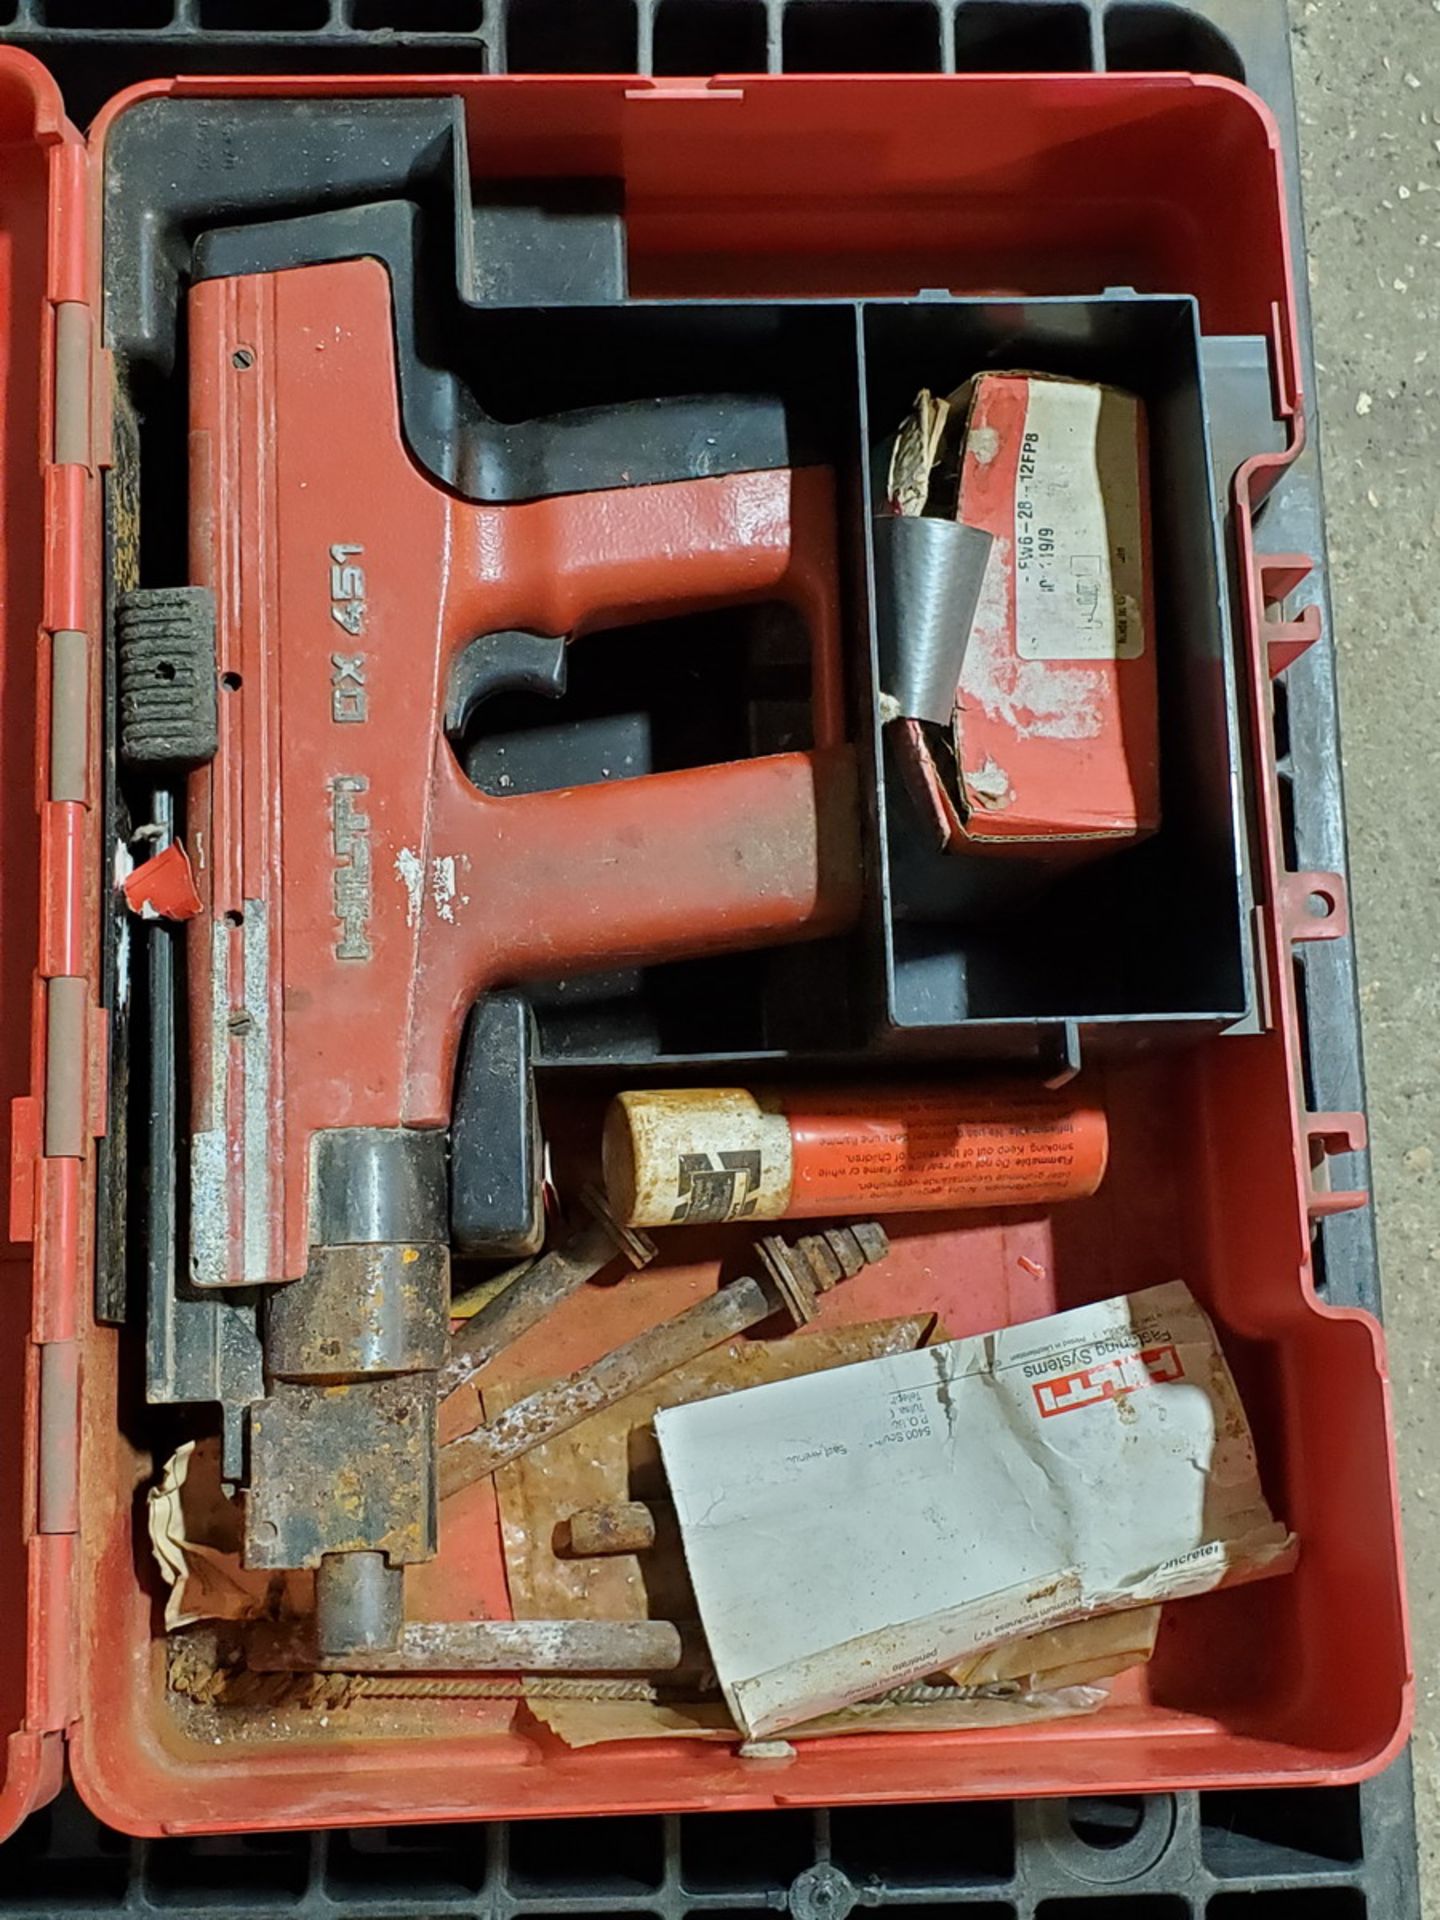 Hilti DX 451 Powder Actuated Nail Gun Fastening Gun W/ Accessories - Image 2 of 2